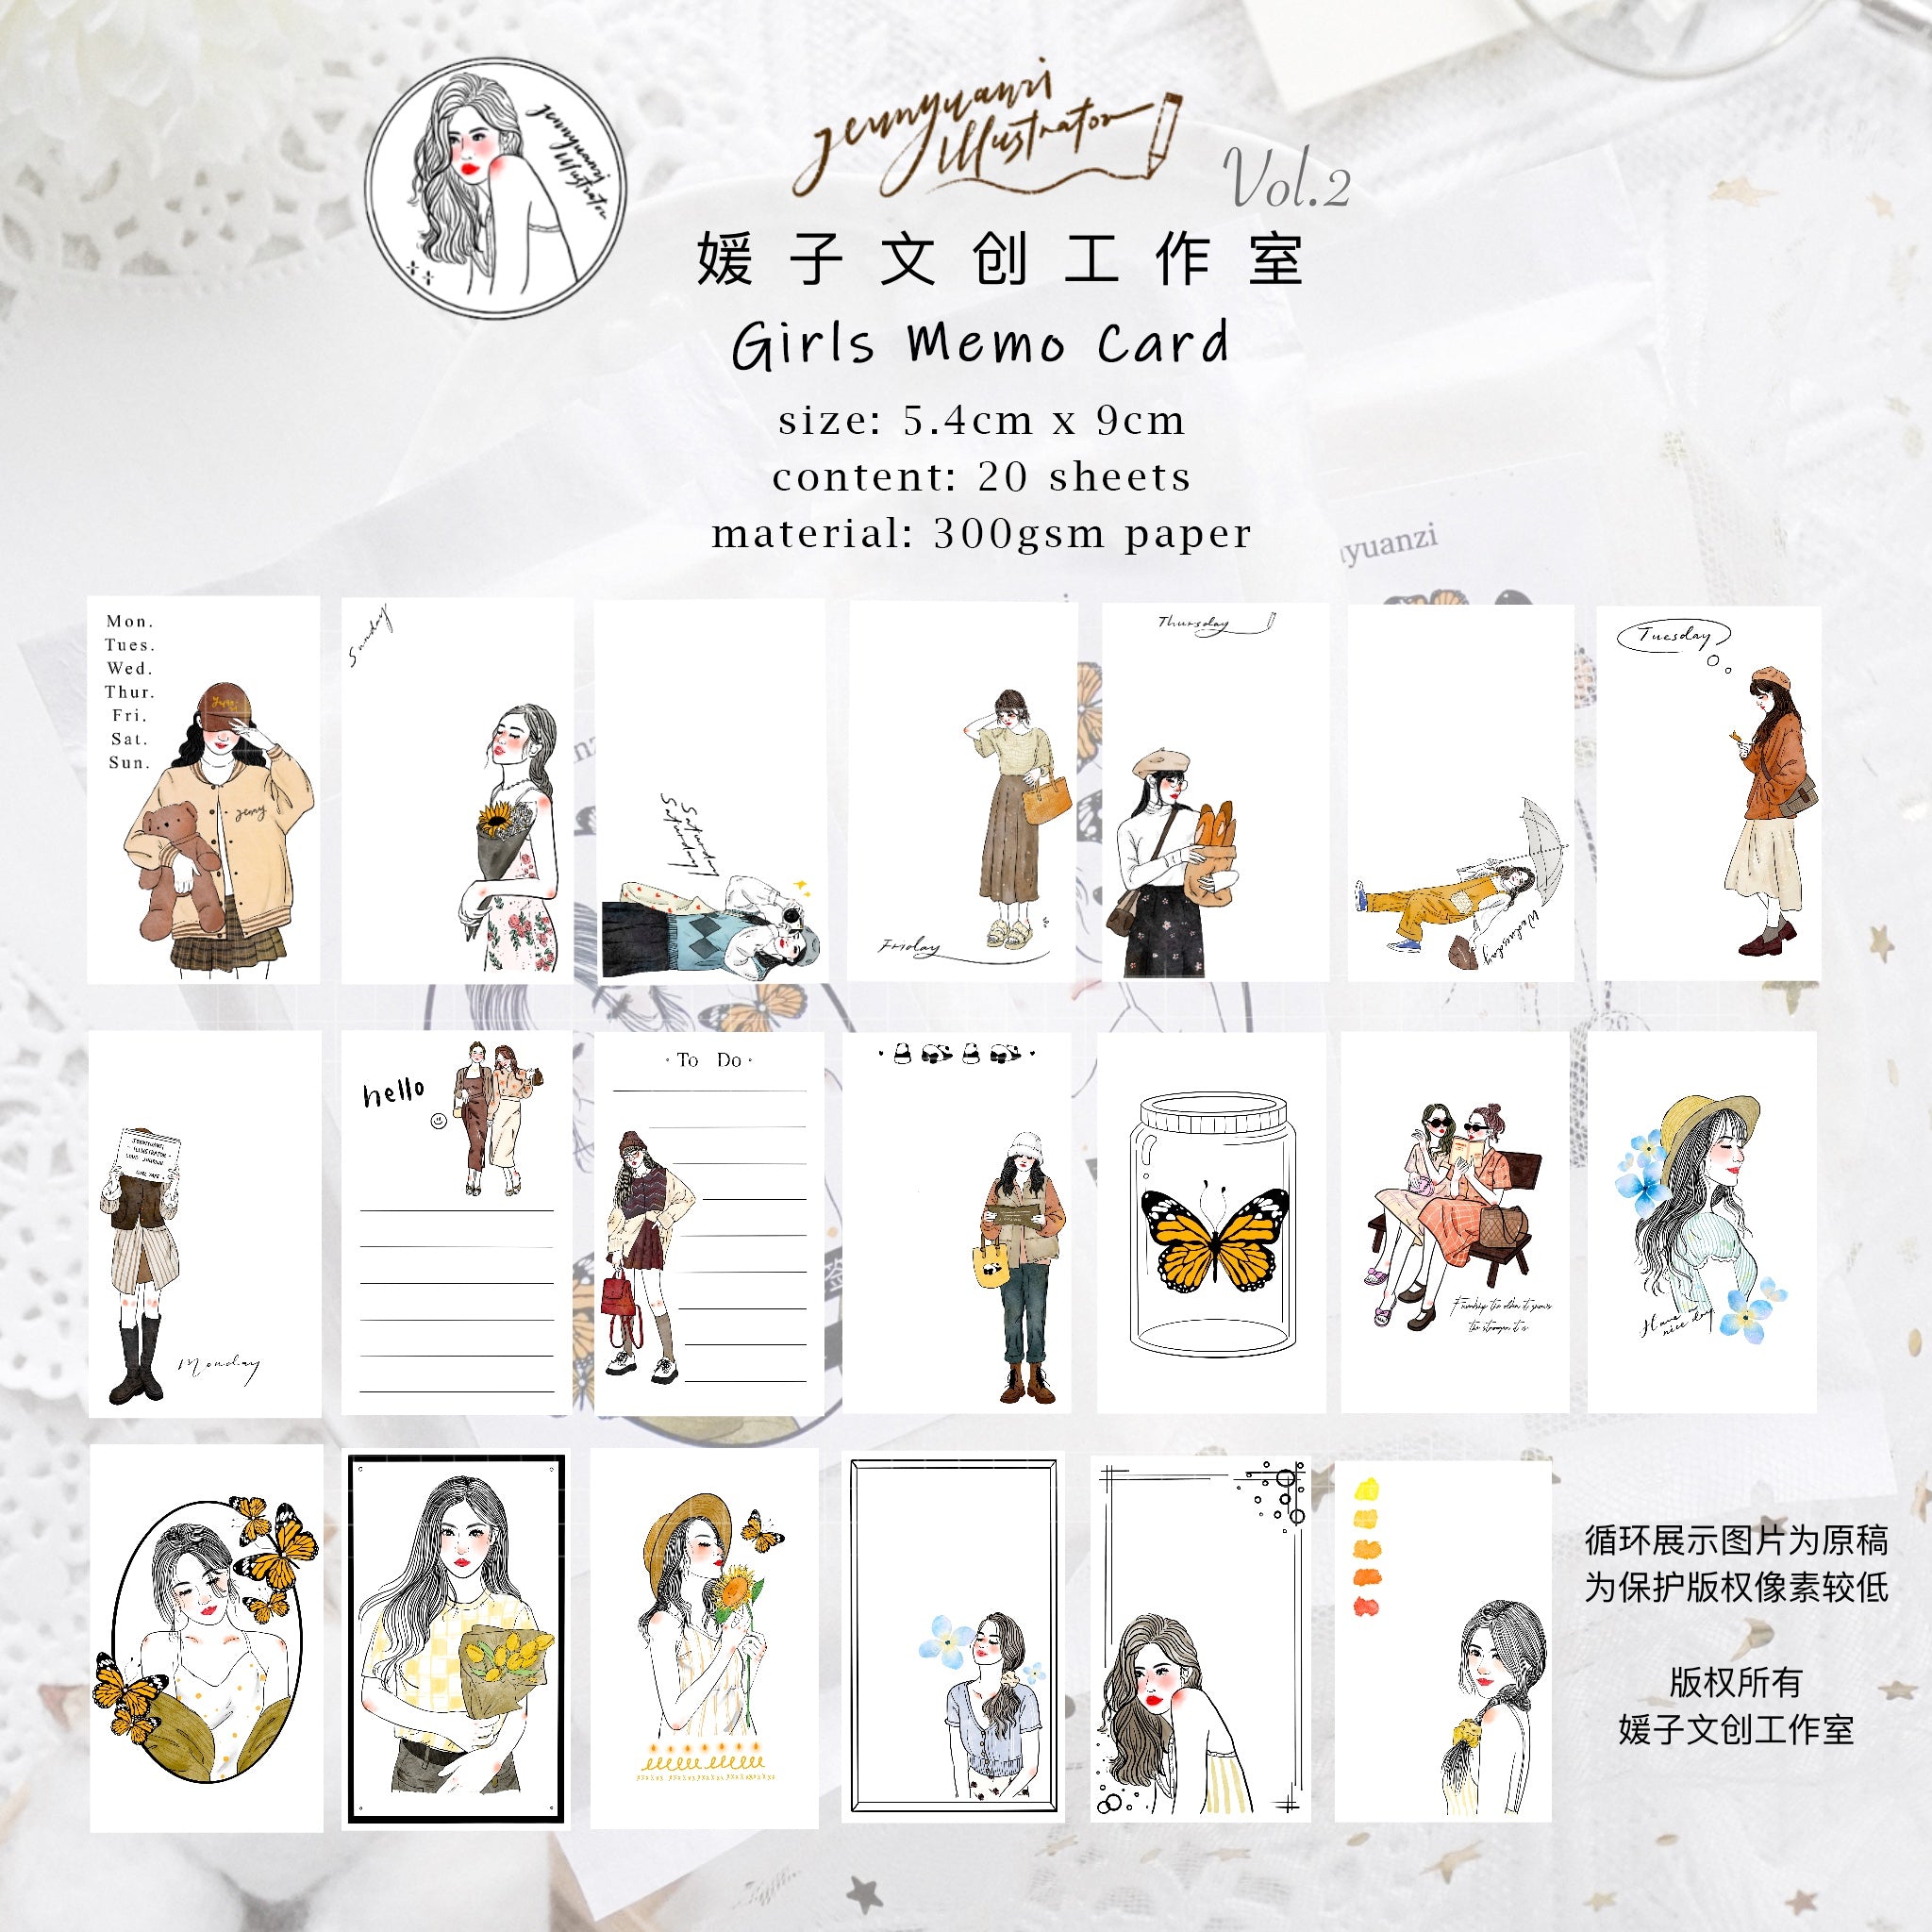 Jennyuanzi Memo Paper: Girls Memo Card